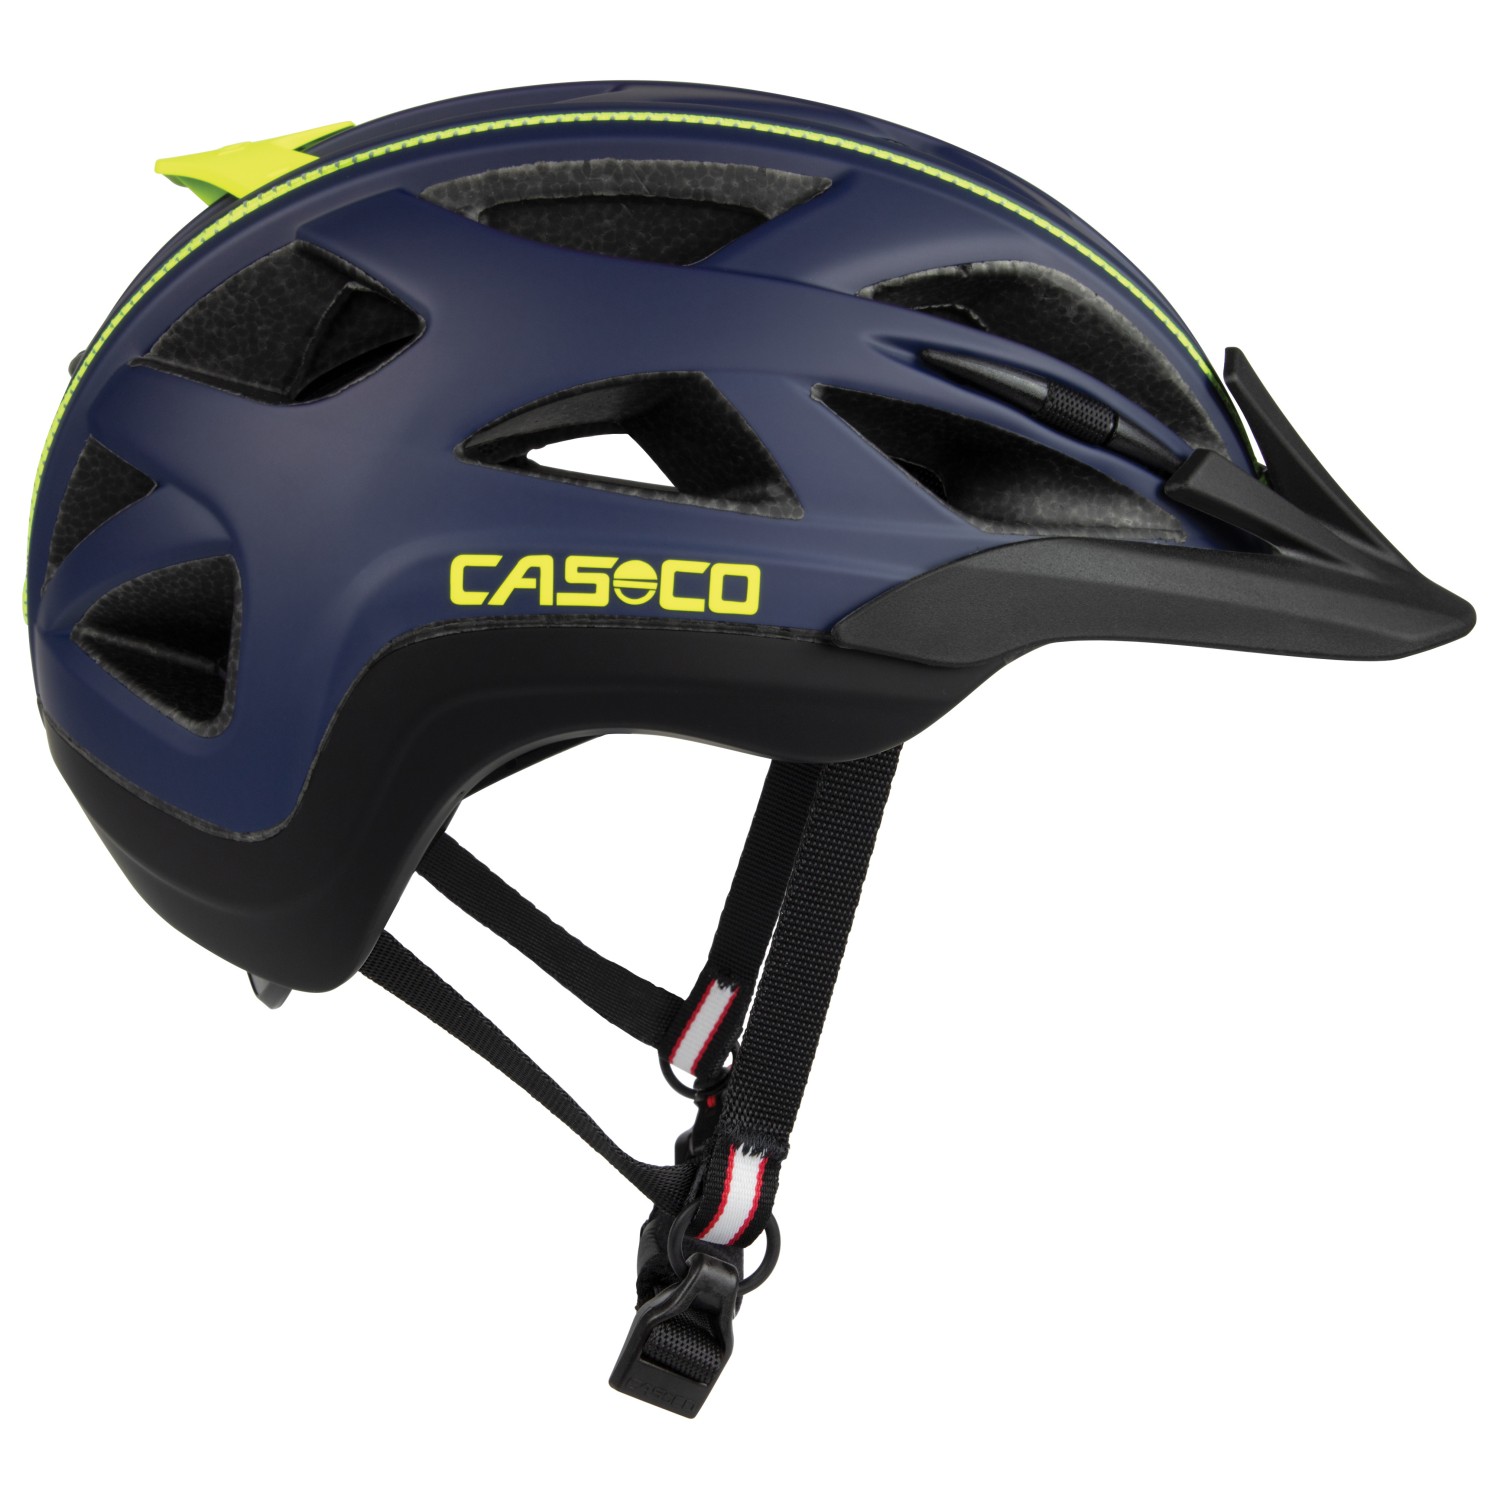 Велосипедный шлем Casco Activ 2, цвет Darkblue шлем casco activ 2 black orange m